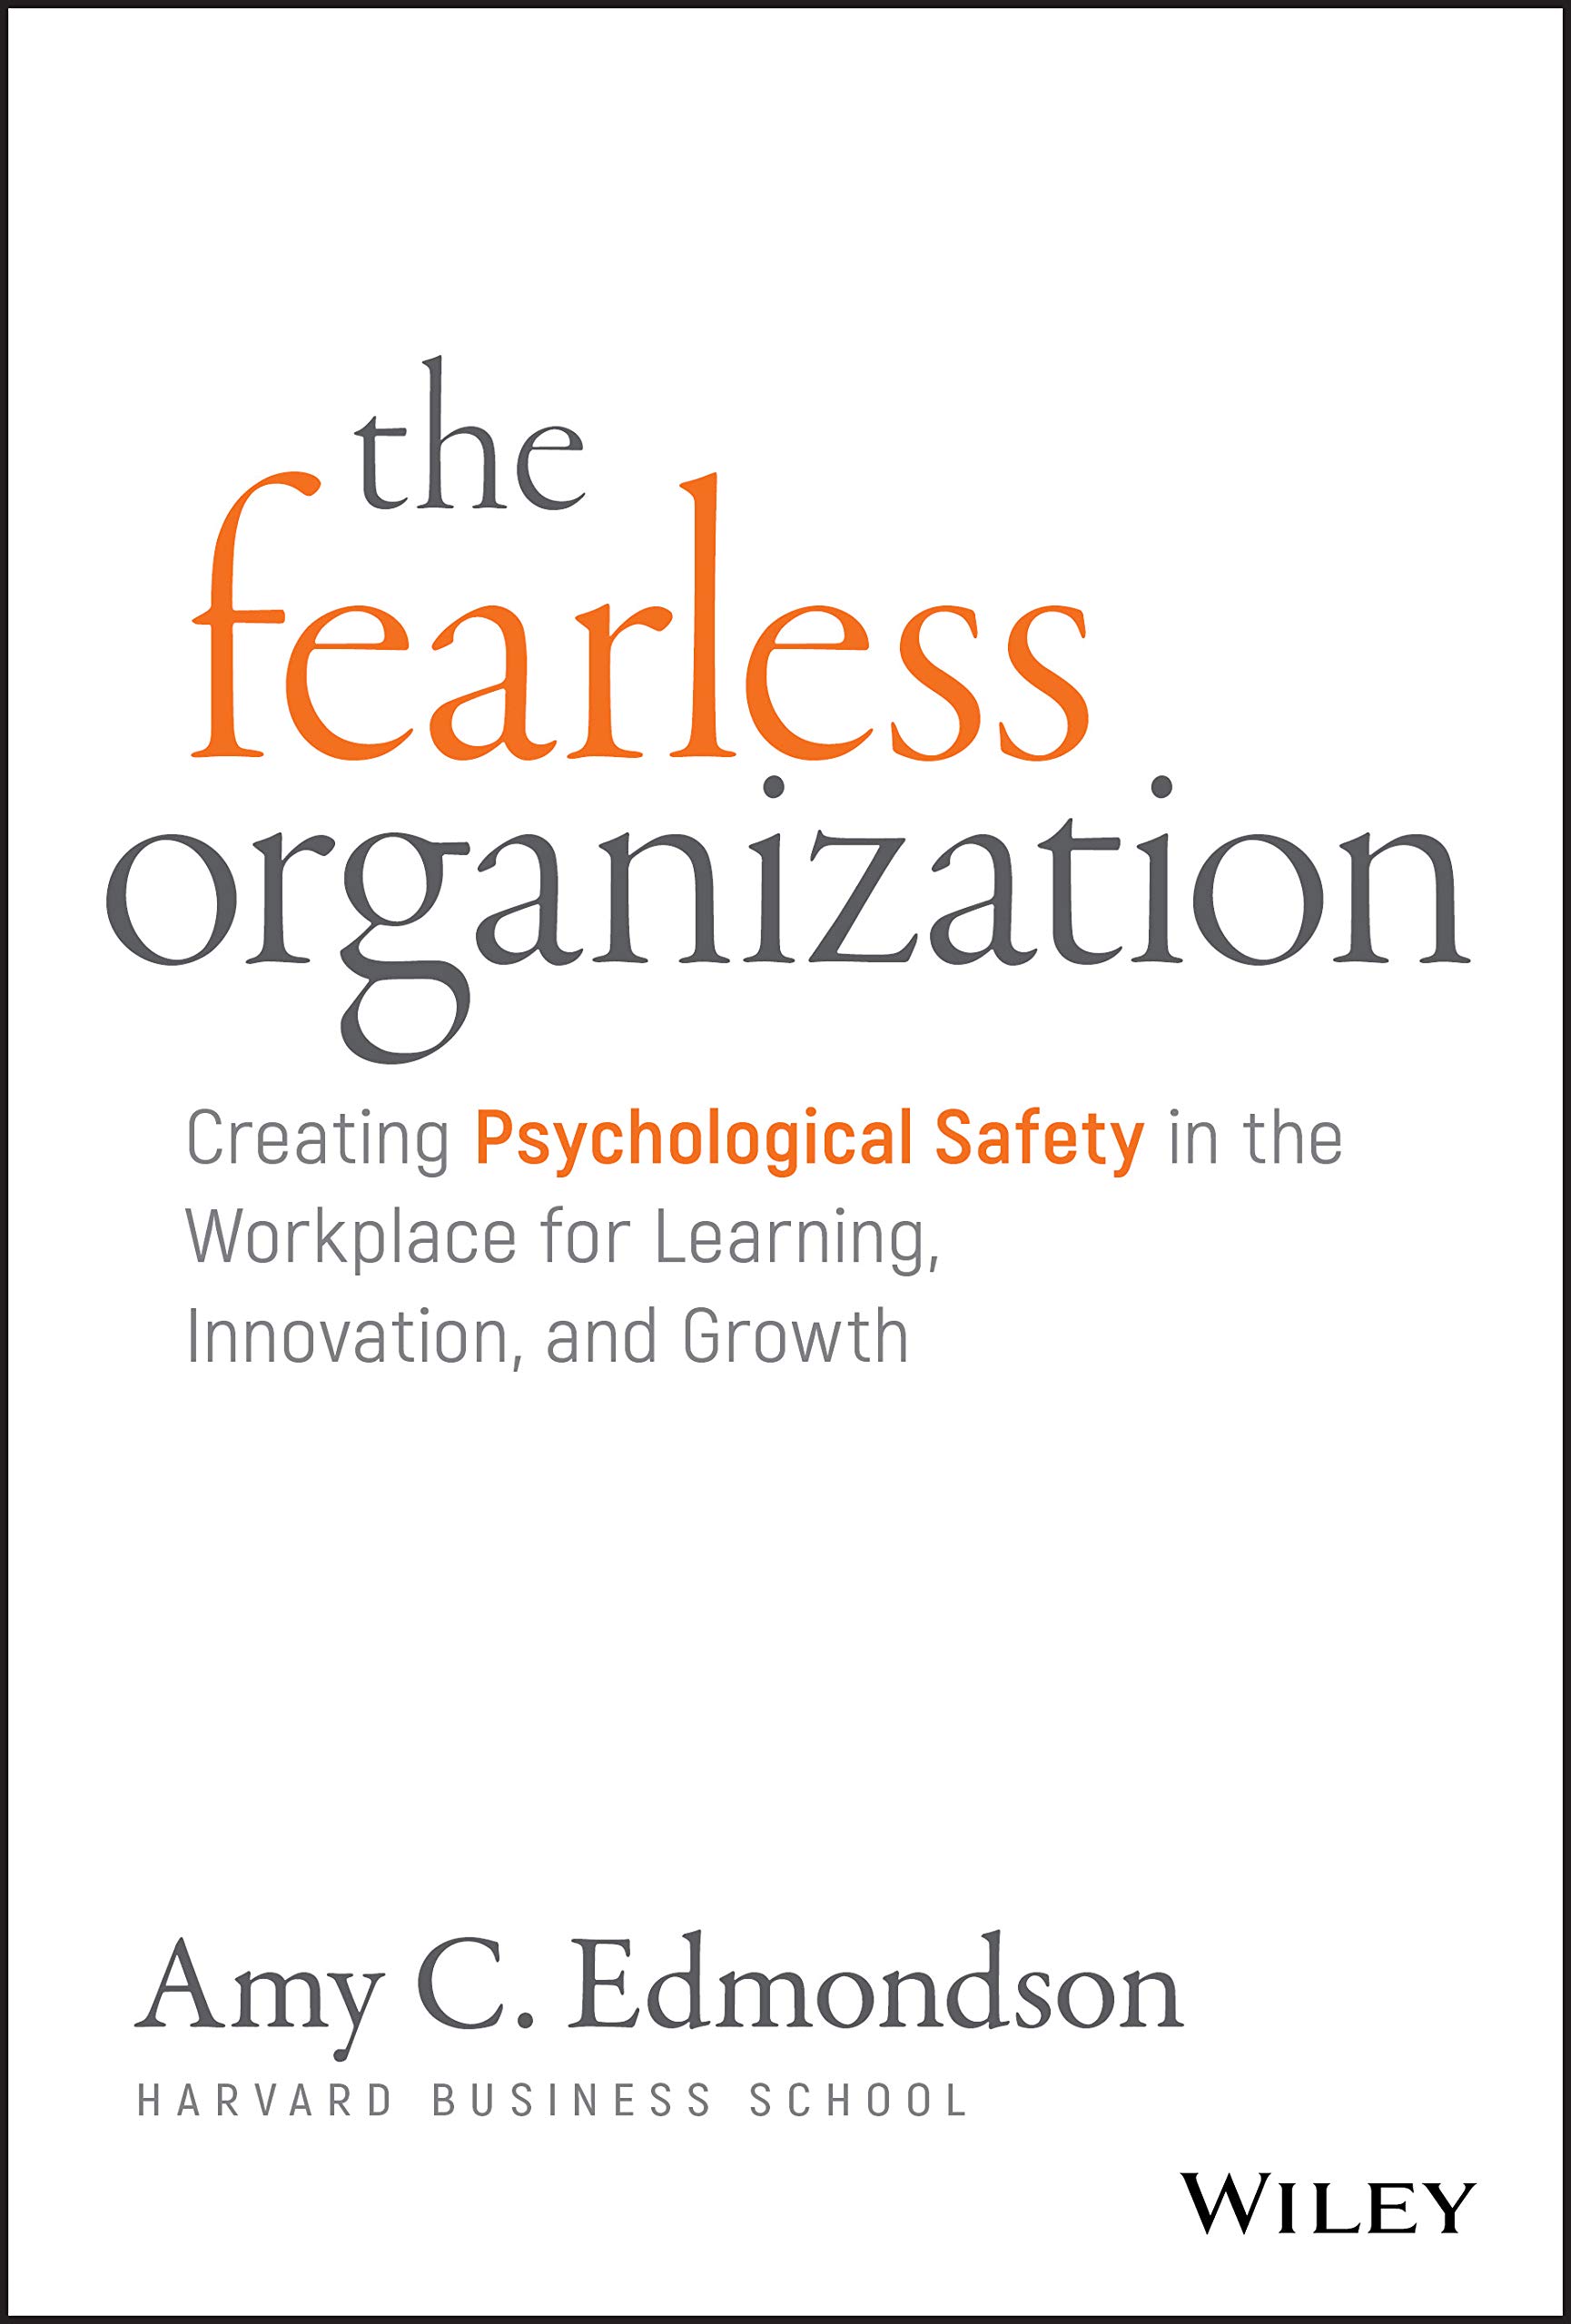 Unlock Fearless Leadership: Exploring “The Fearless Organisation” by Amy Edmondson